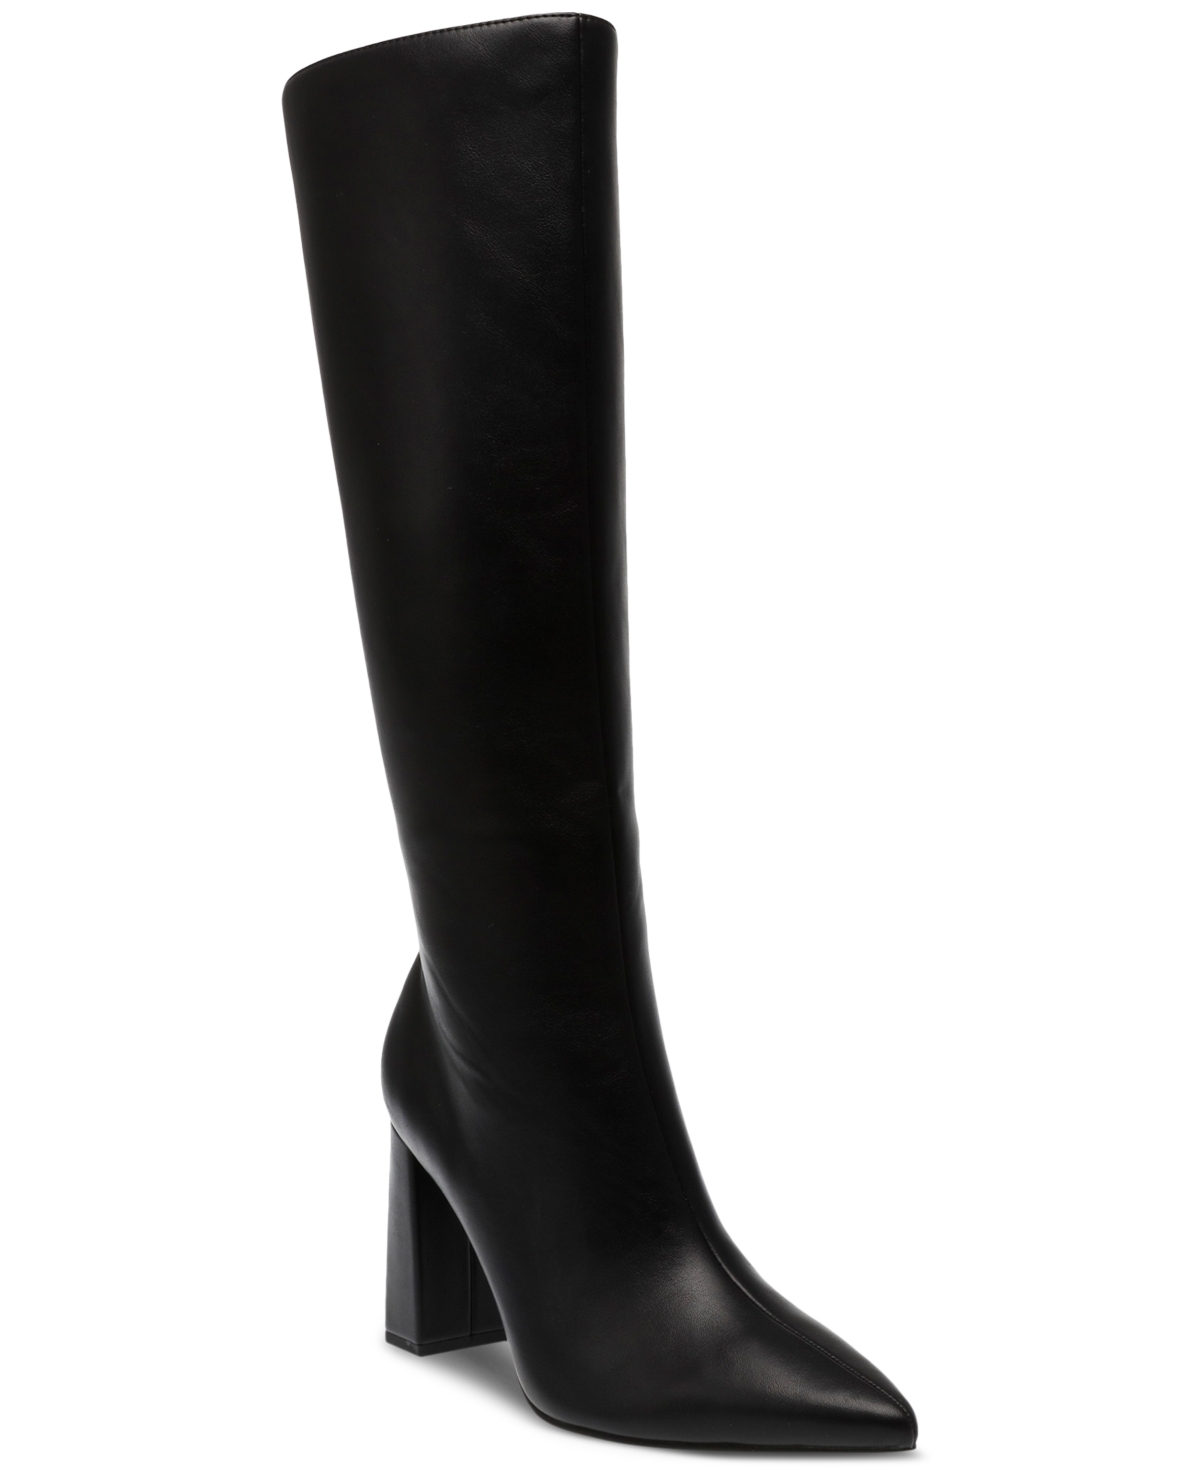 Islah Block-Heel Dress Boots, Created for Macy's - Black Smooth